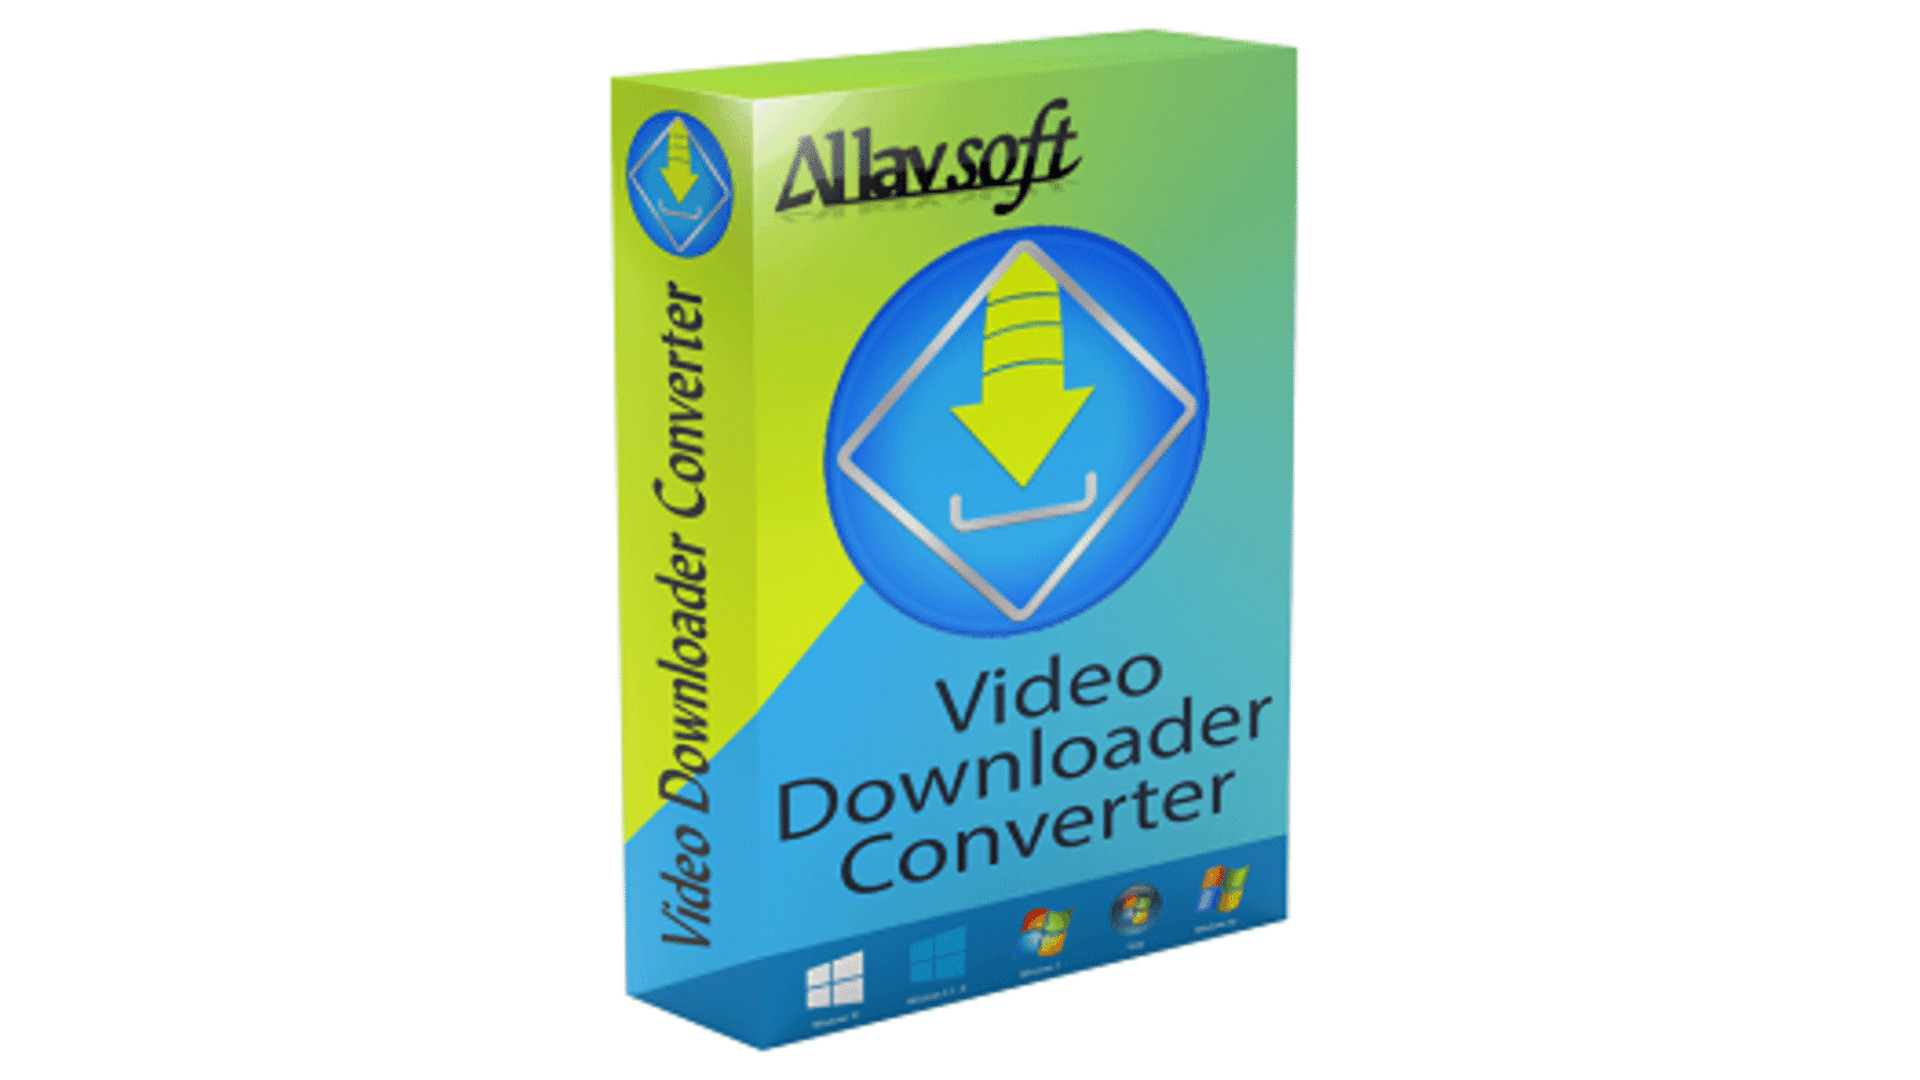 Allavsoft Video Downloader and Converter for Windows CD Key, 2.75 usd